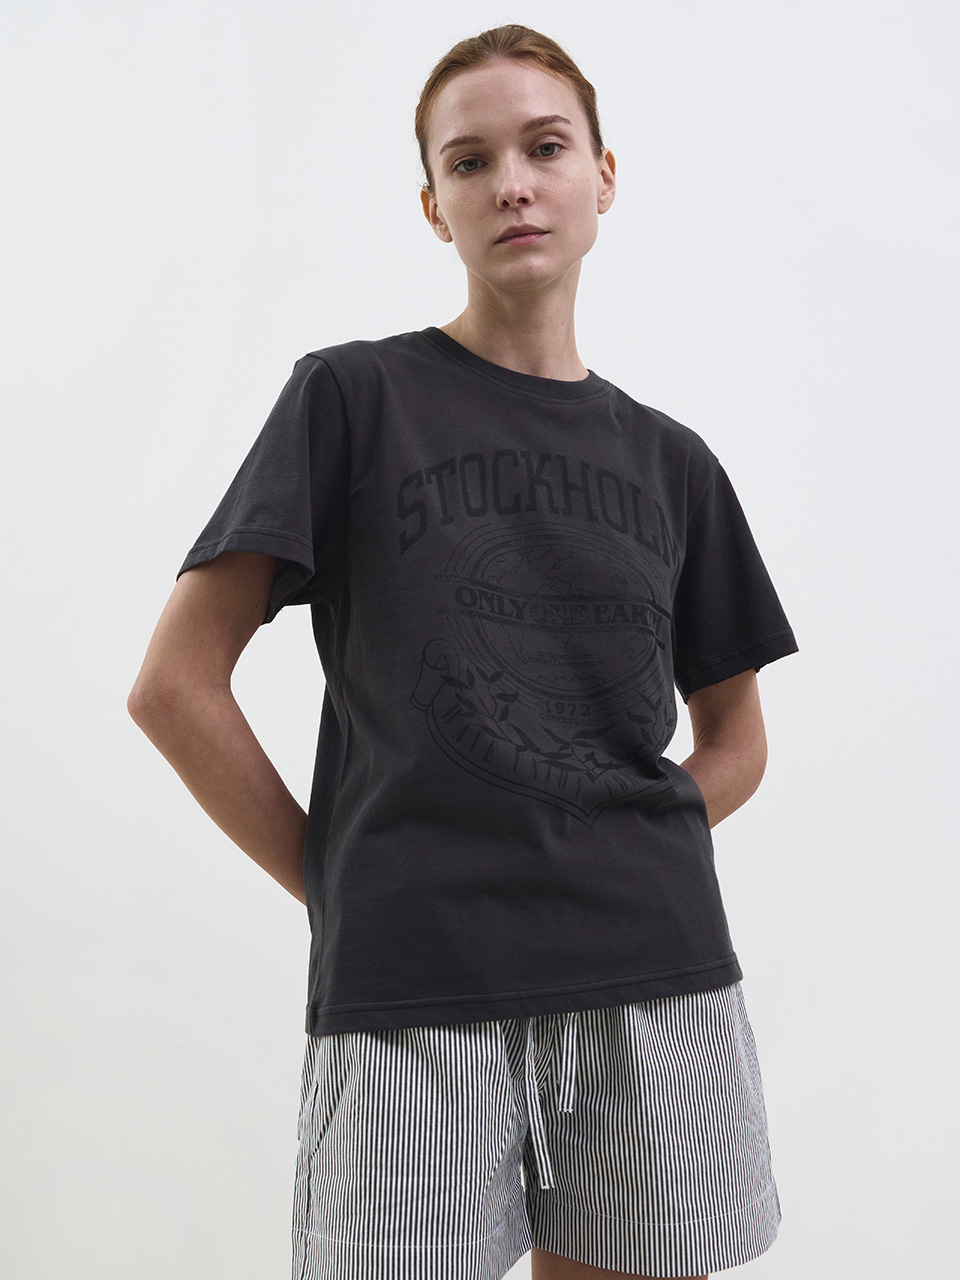 Stockholm T-shirt charcoal